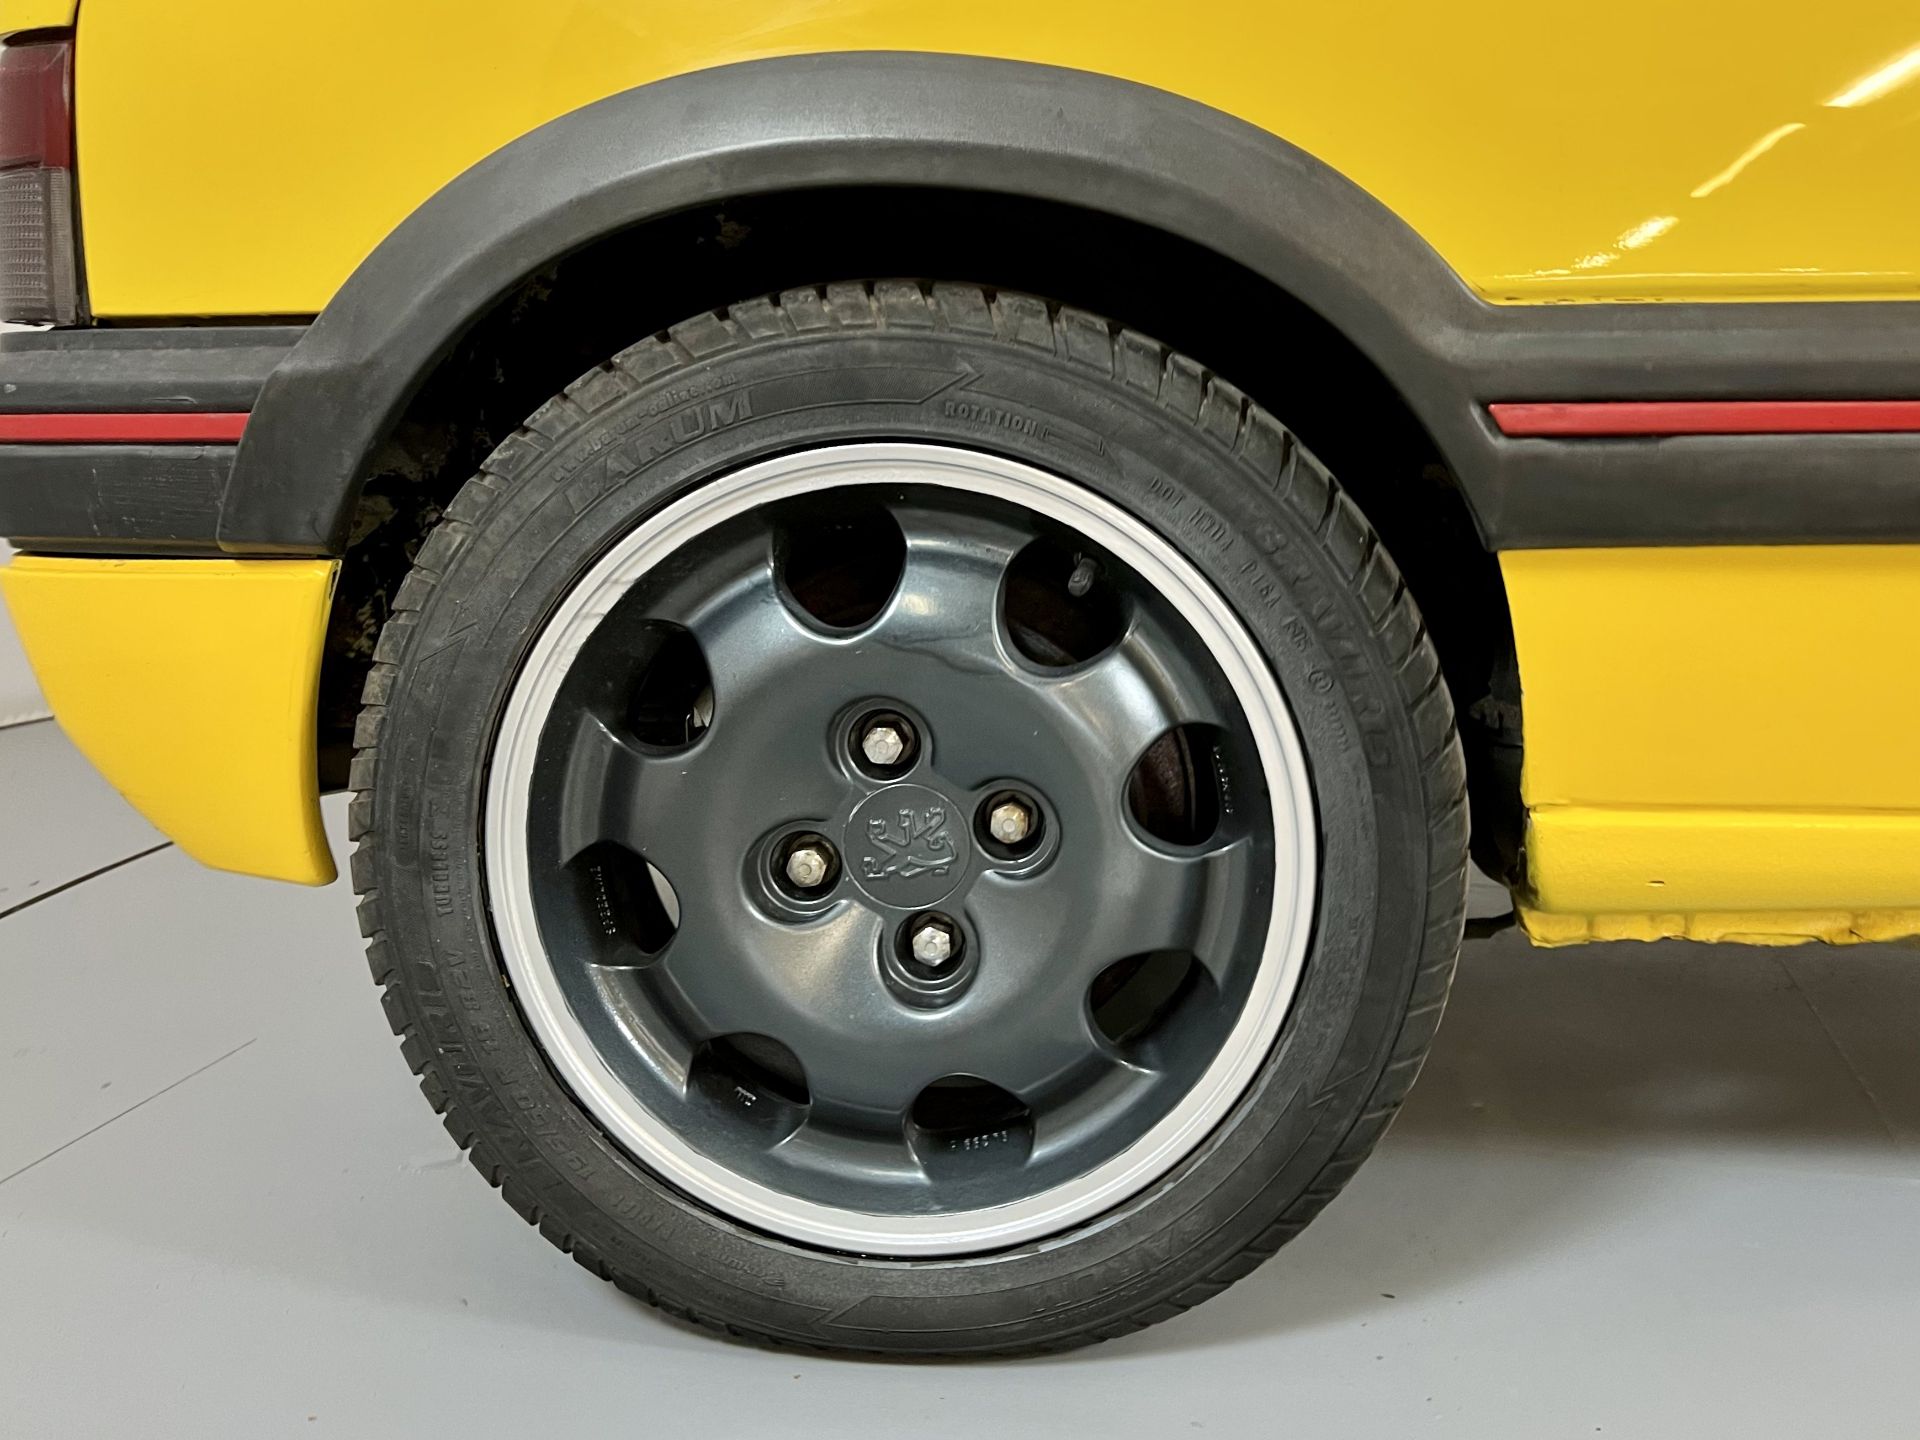 Peugeot 205 GTI Prototype - Image 15 of 30